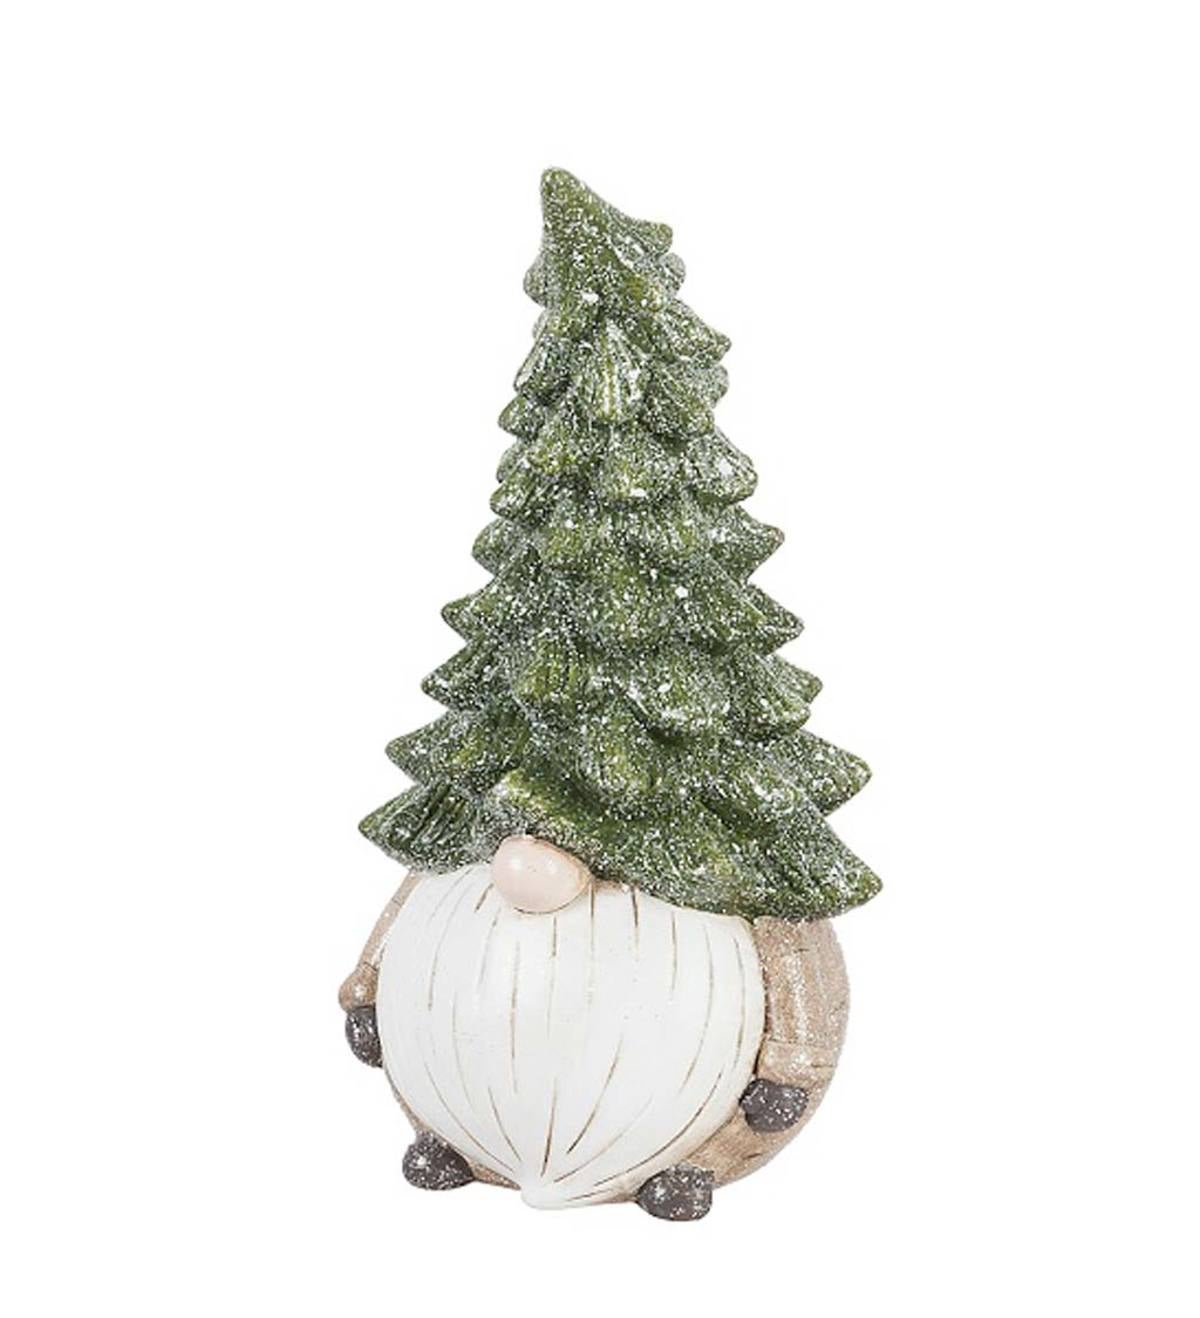 Ceramic Garden Gnome with Short Evergreen Tree Hat